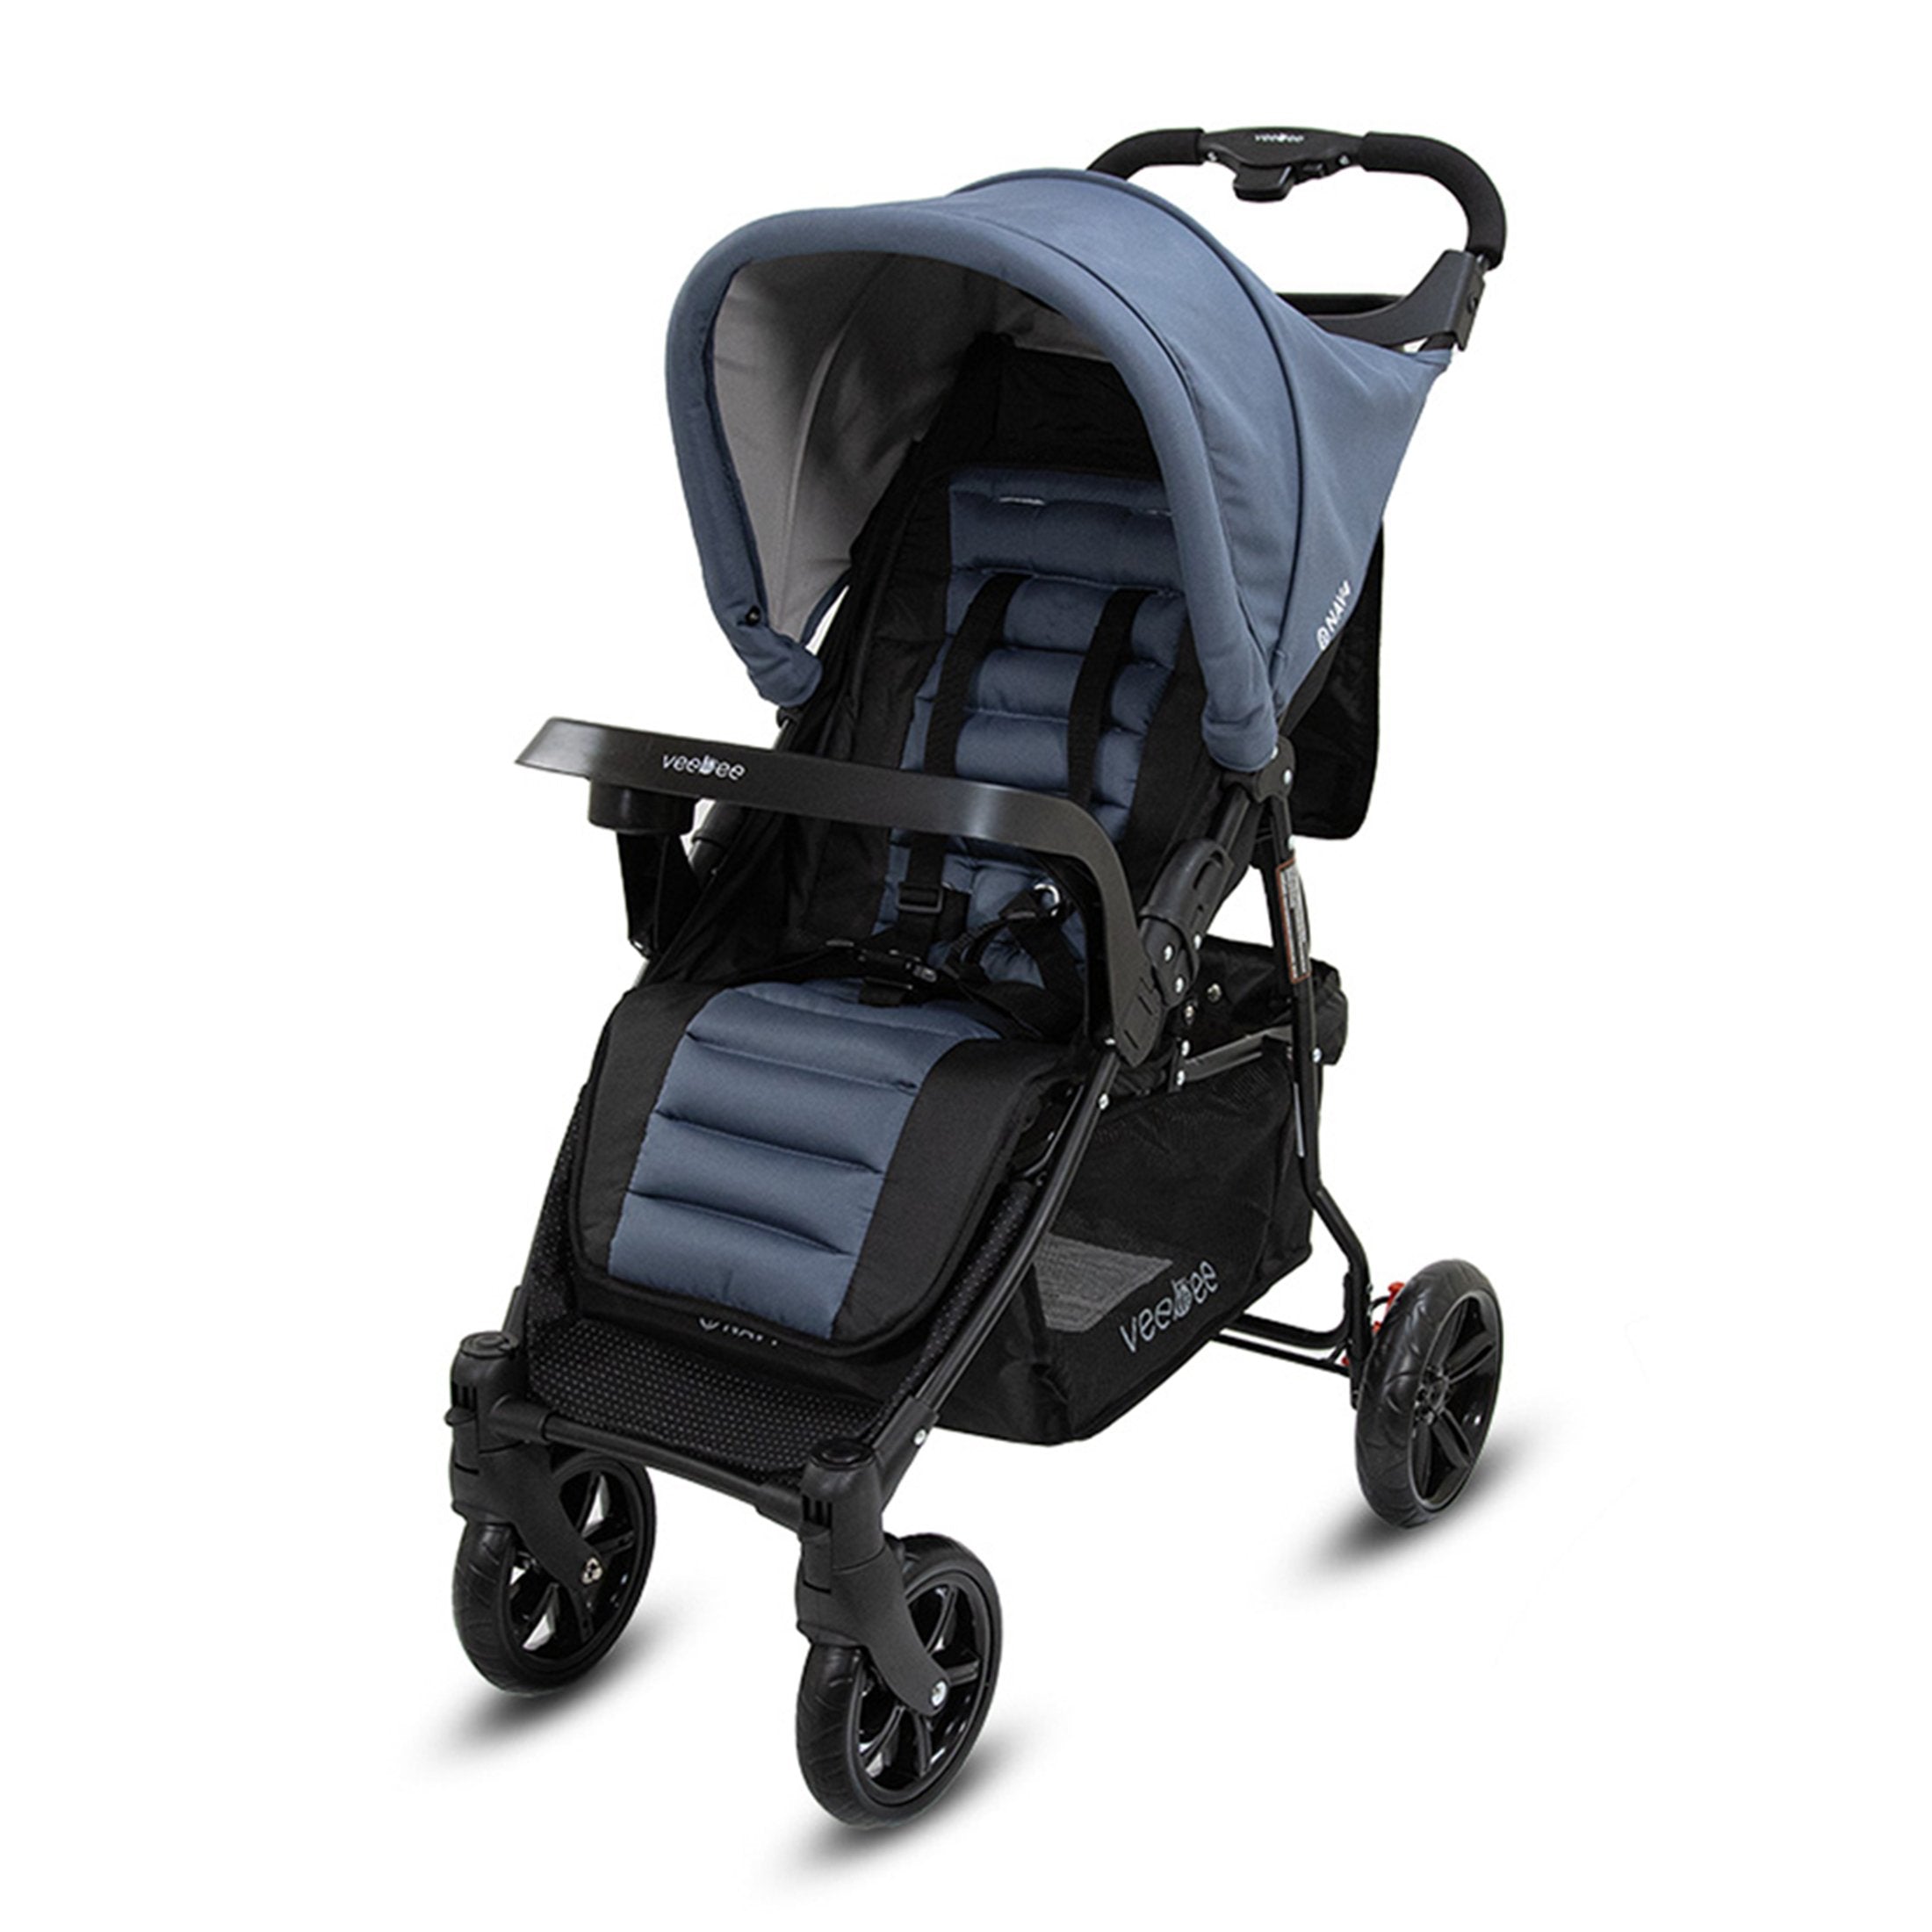 Veebee Nav 4 Stroller Lightweight Pram For Newborns To Toddlers - Glacie